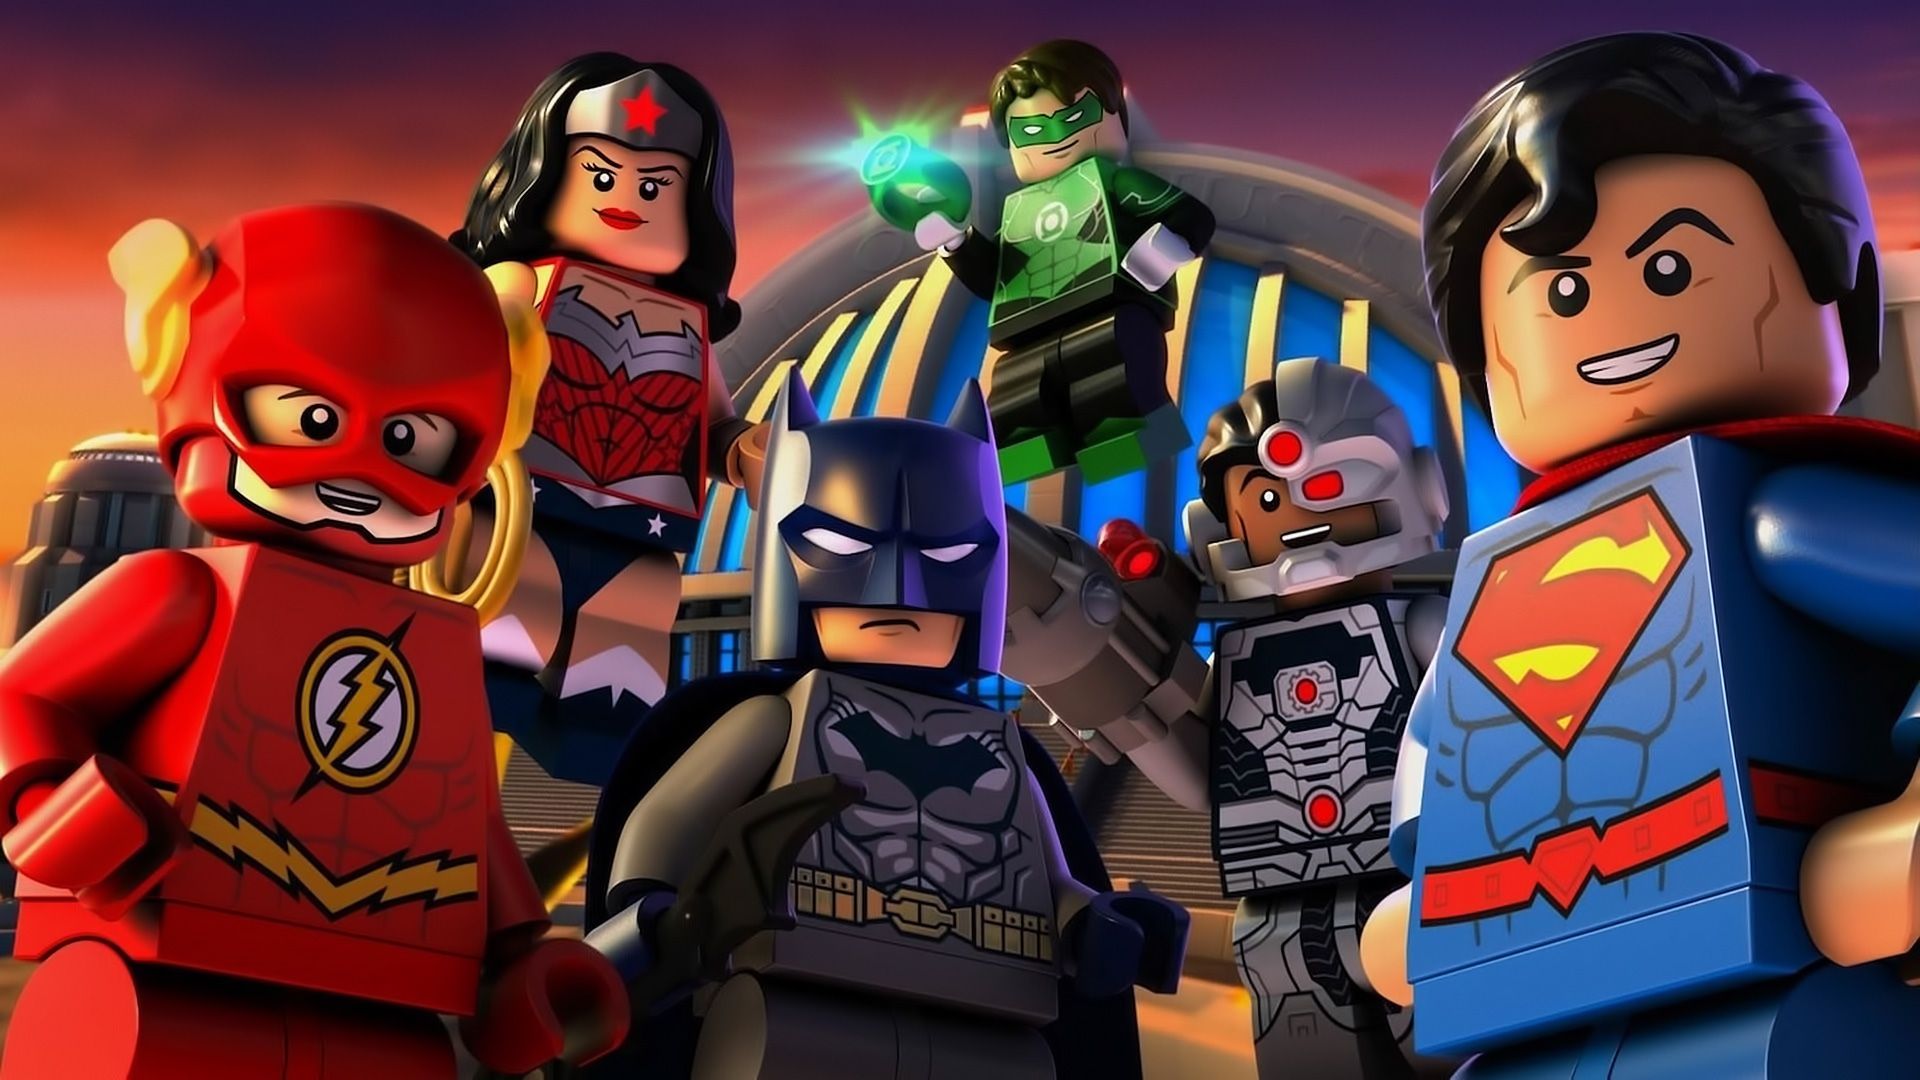 Lego DC Comics Super Heroes: Justice League - Cosmic Clash background